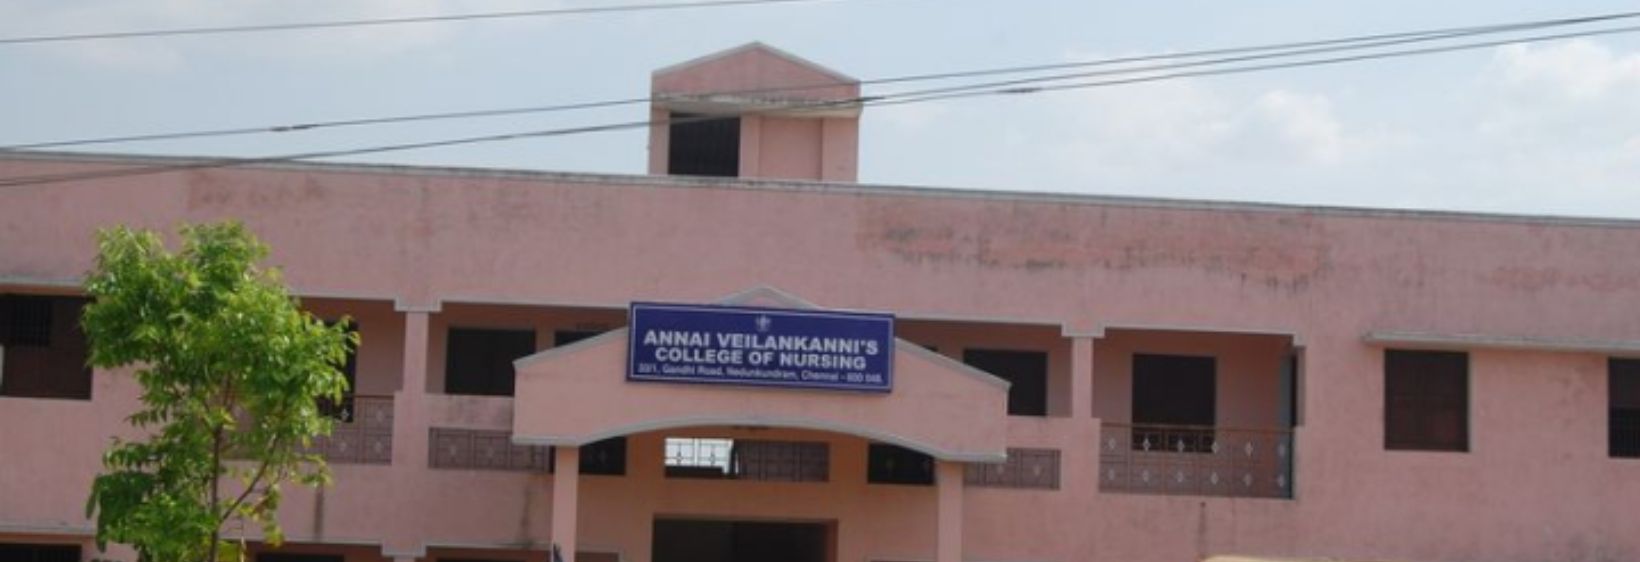 Annai Veilankanni's College of Nursing - Chennai